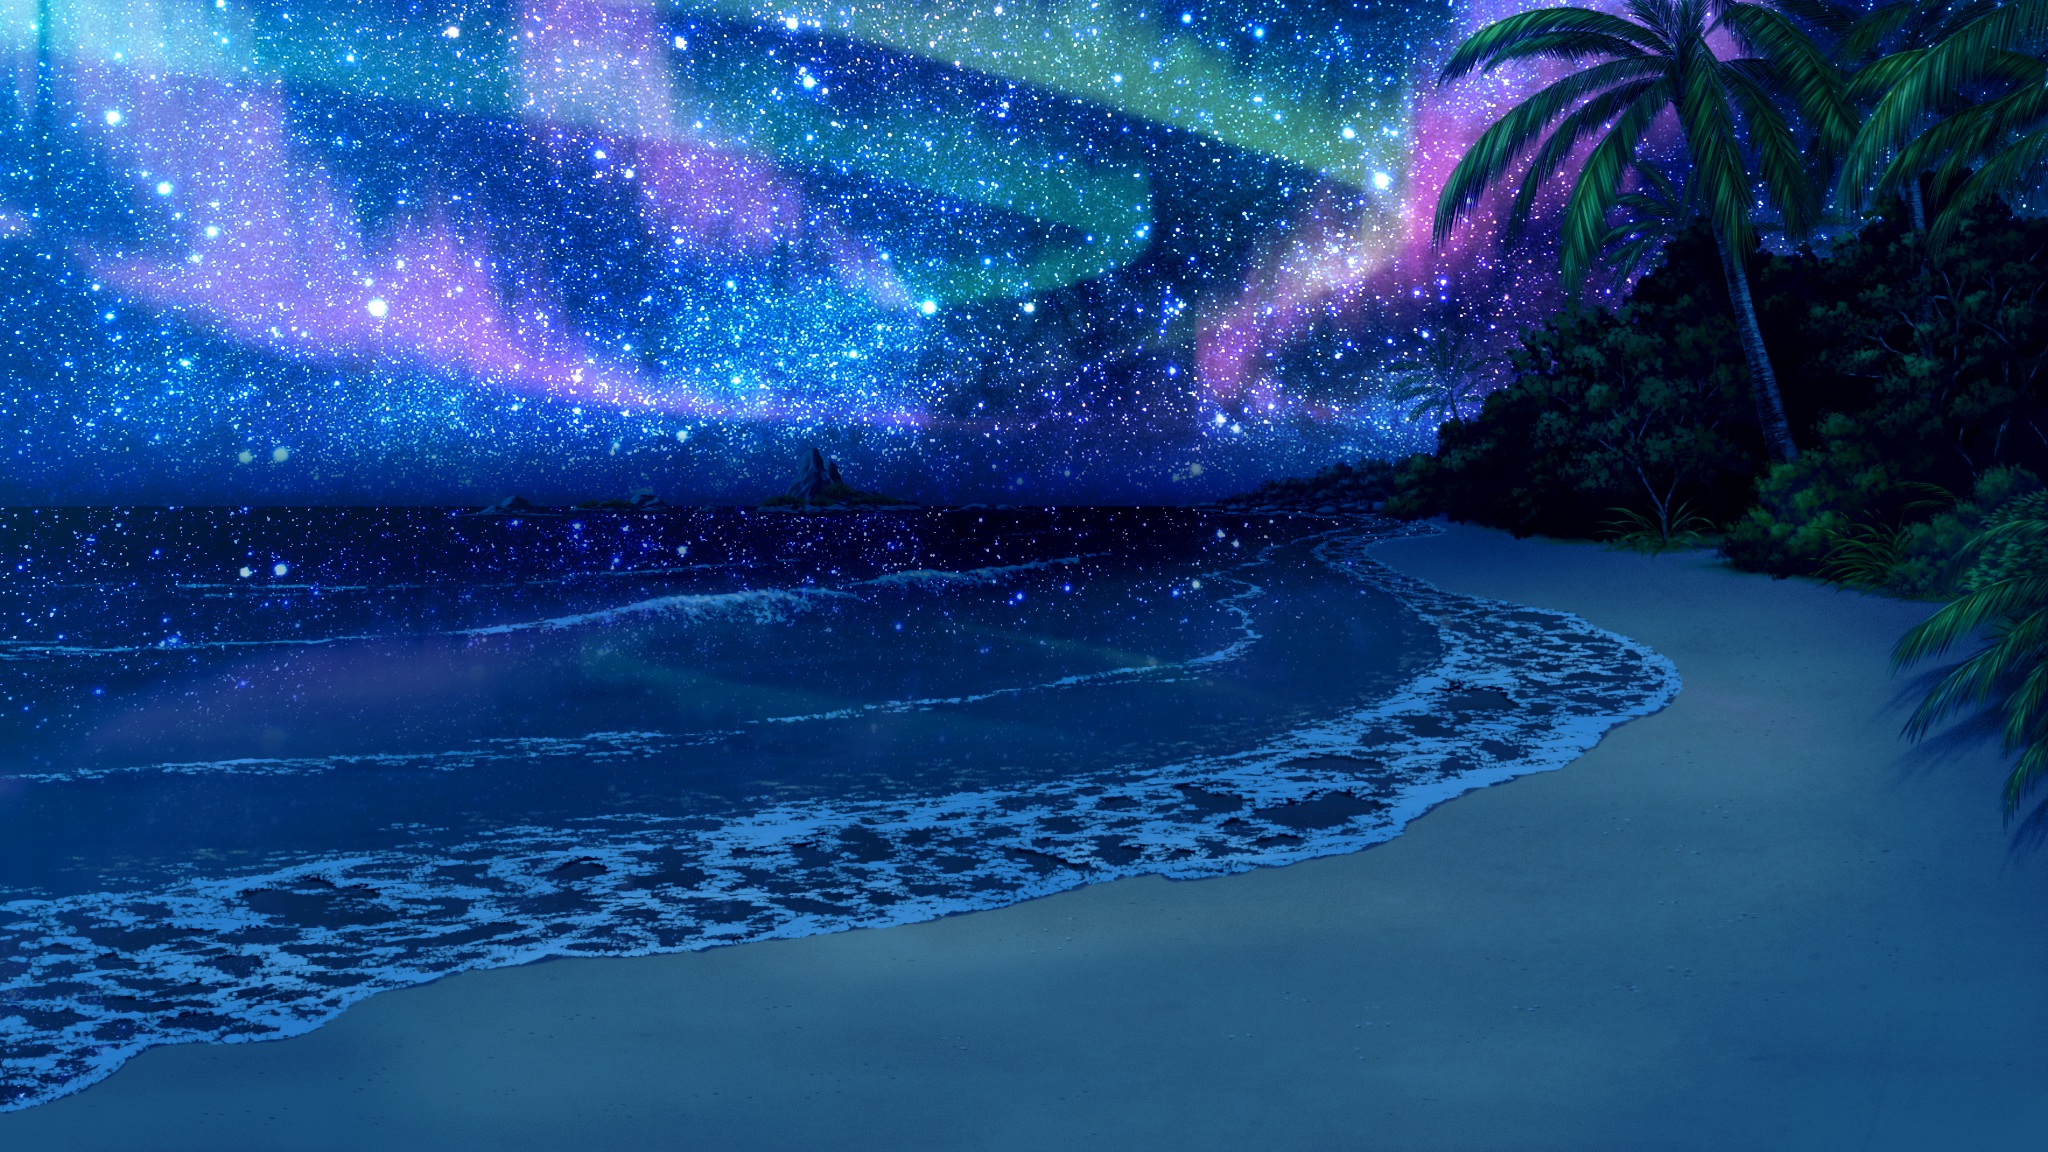 Free Download Beach At Night Backgrounds - PixelsTalk.Net